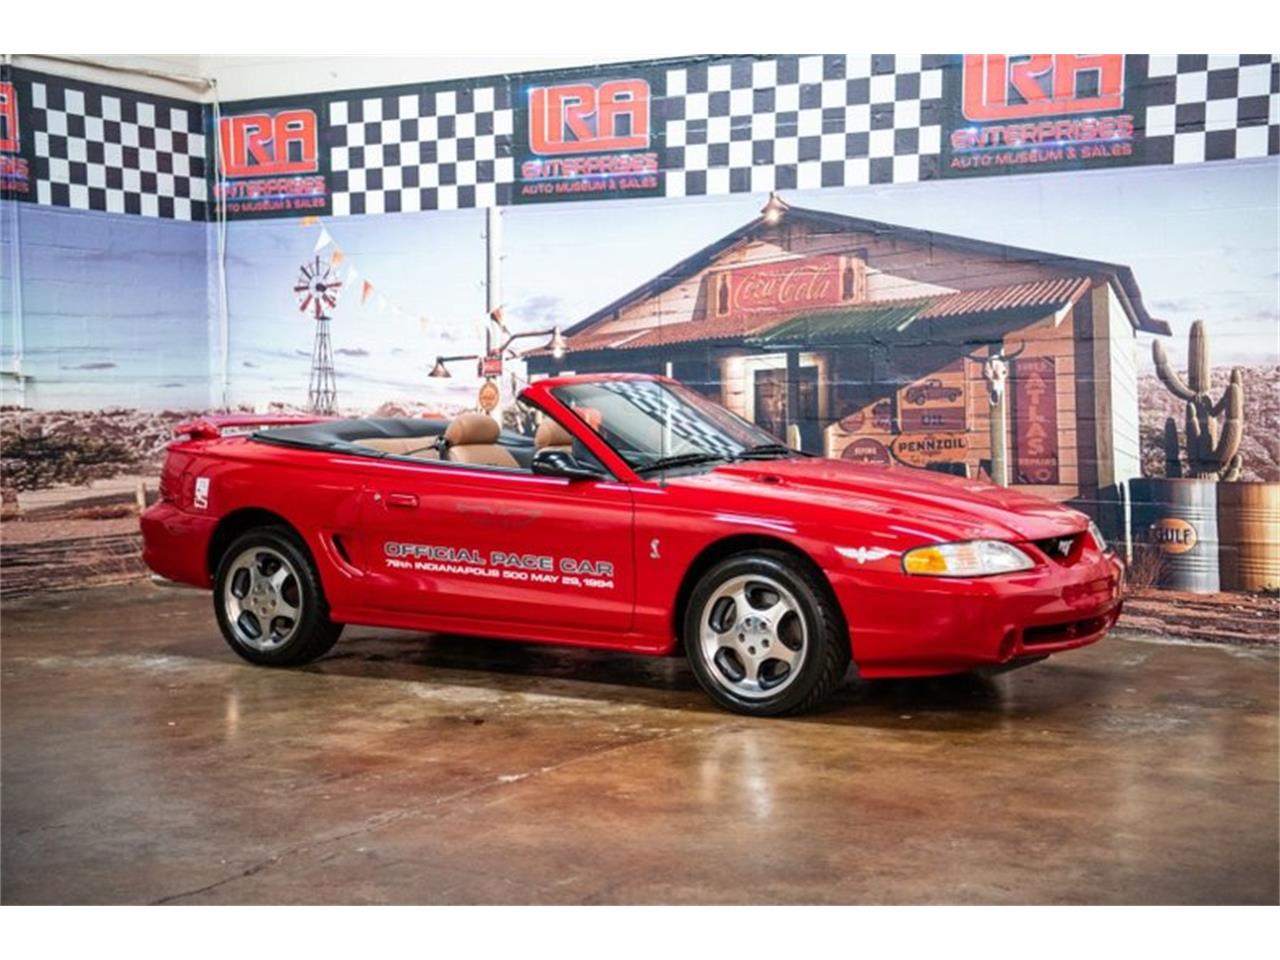 For Sale: 1994 Ford Mustang SVT Cobra in Bristol, Pennsylvania for sale in Bristol, PA